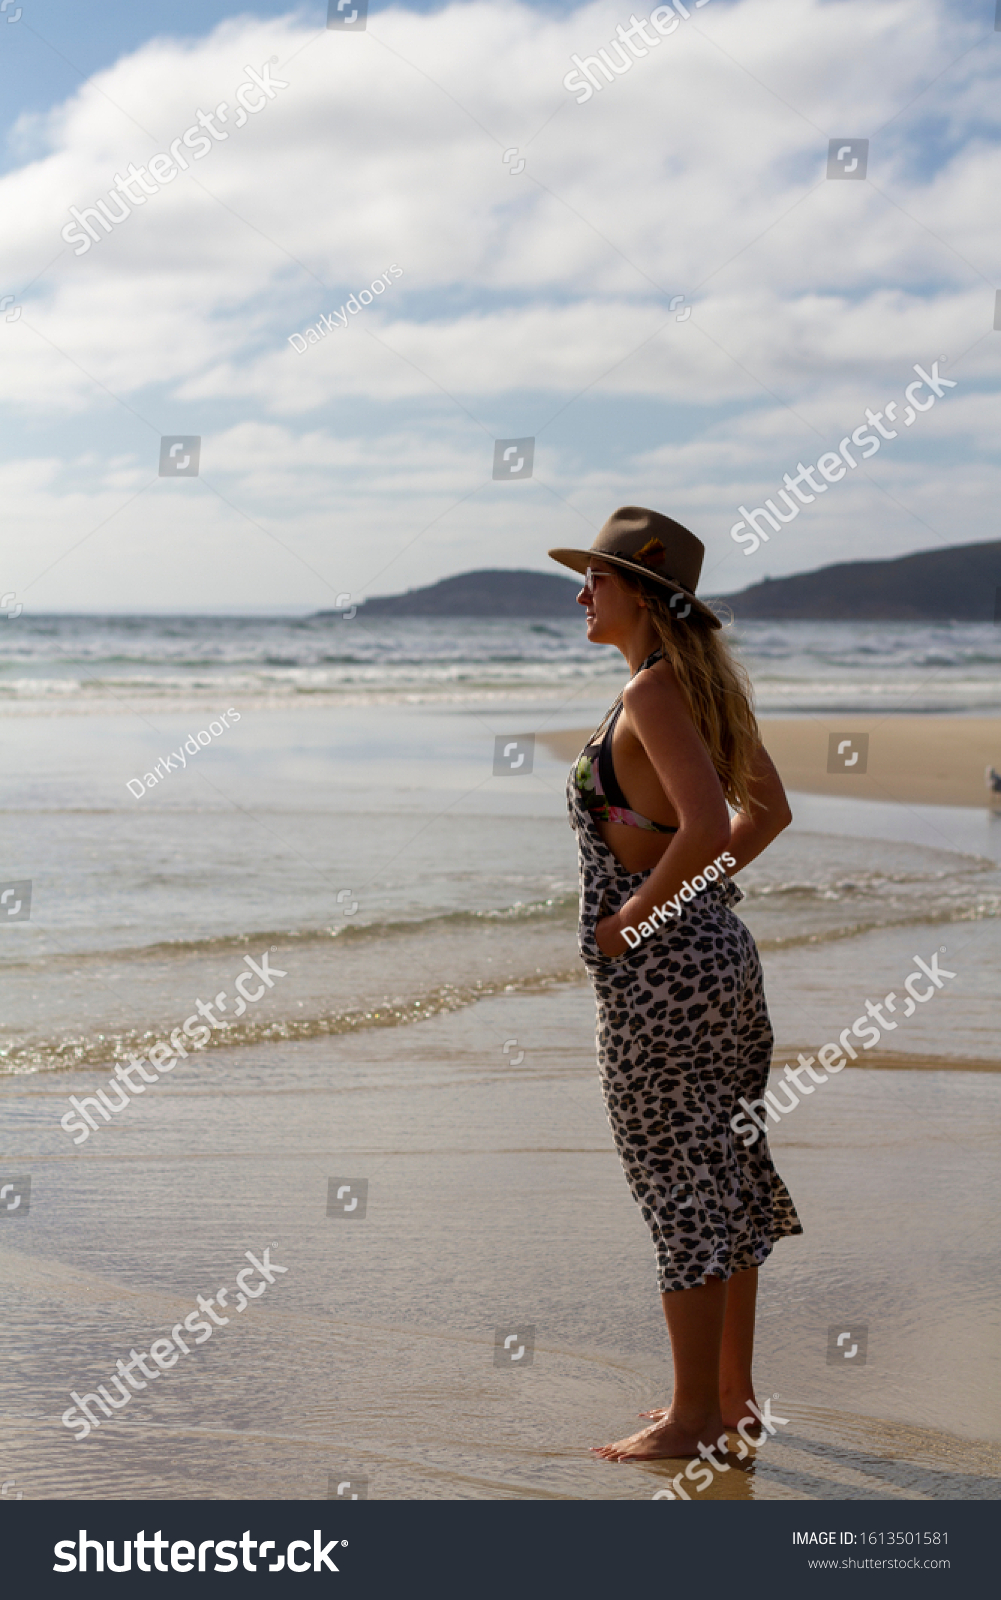 Wife On Beach Pics